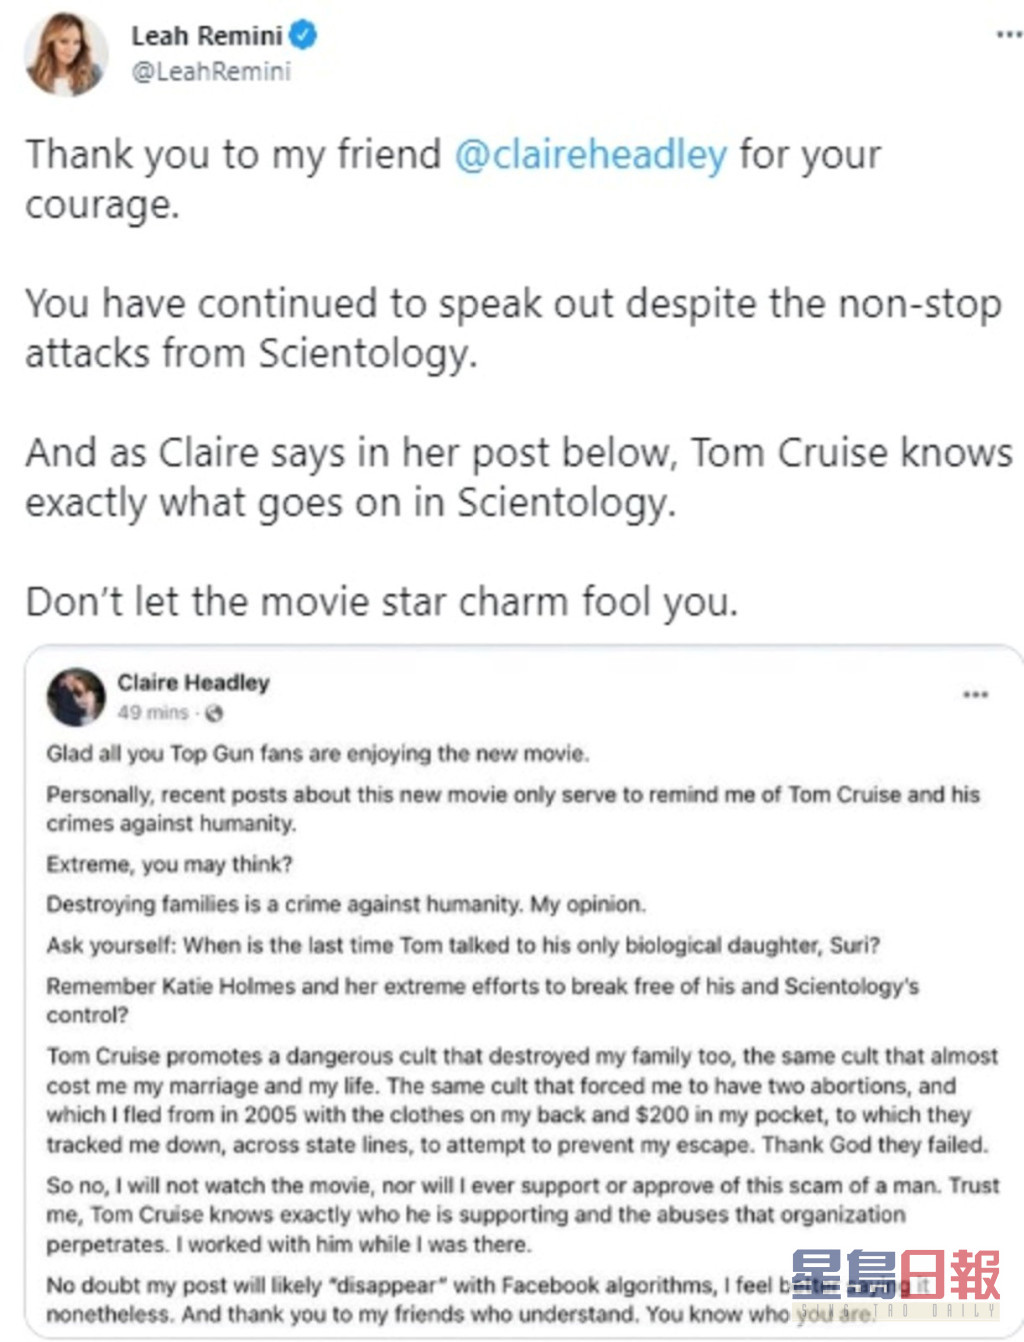 Leah转贴前科学教派信徒Claire Headley的社交网帖文，指摘汤告鲁斯宣扬邪教。